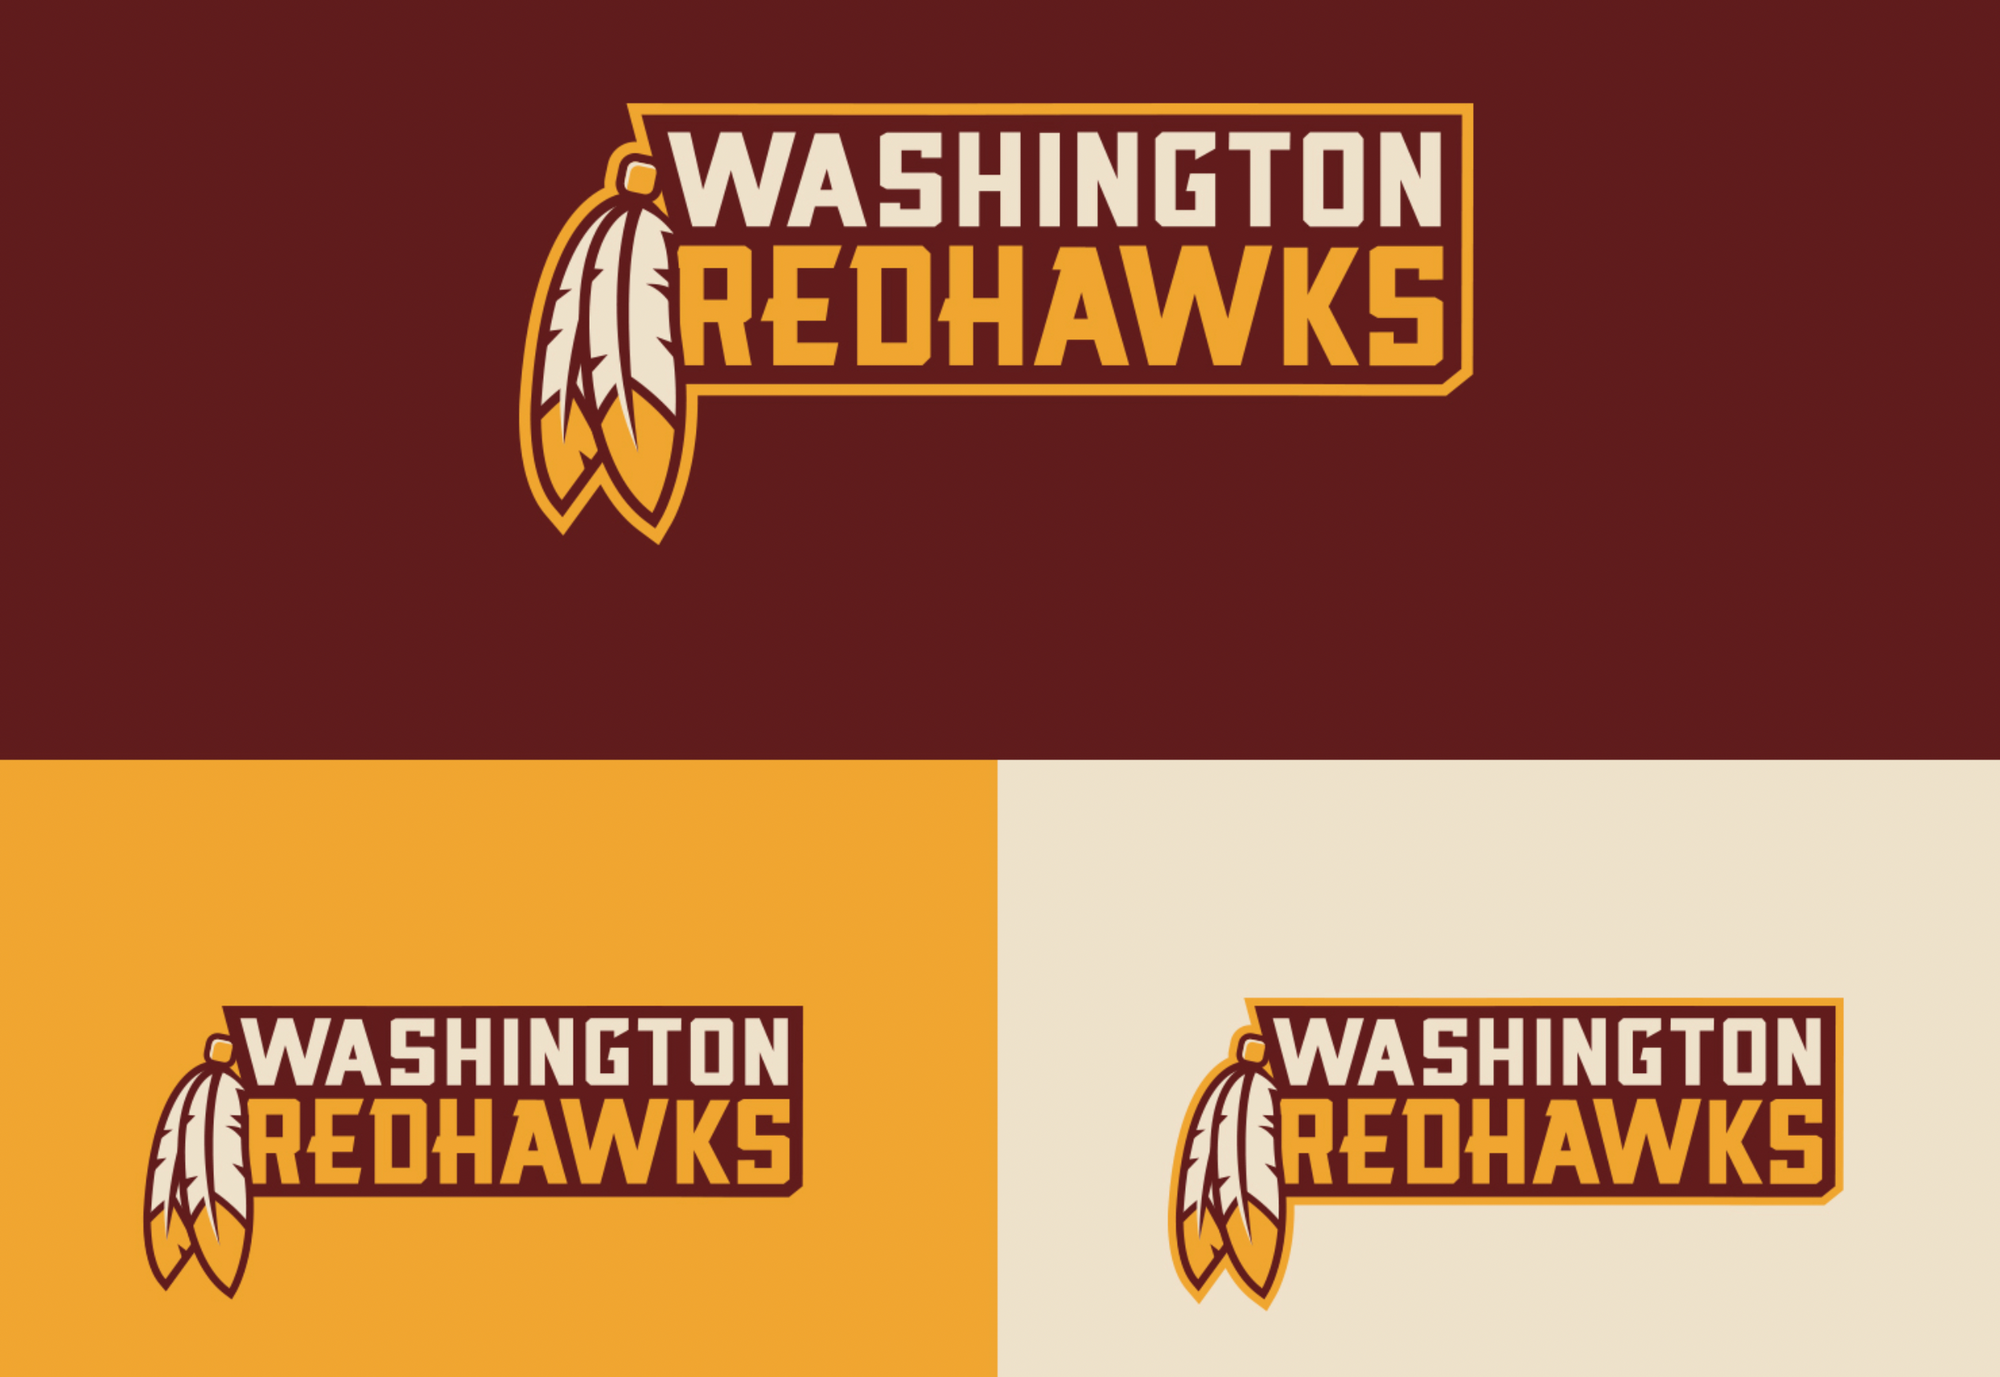 Breakdown: Washington Commanders Logo and Brand